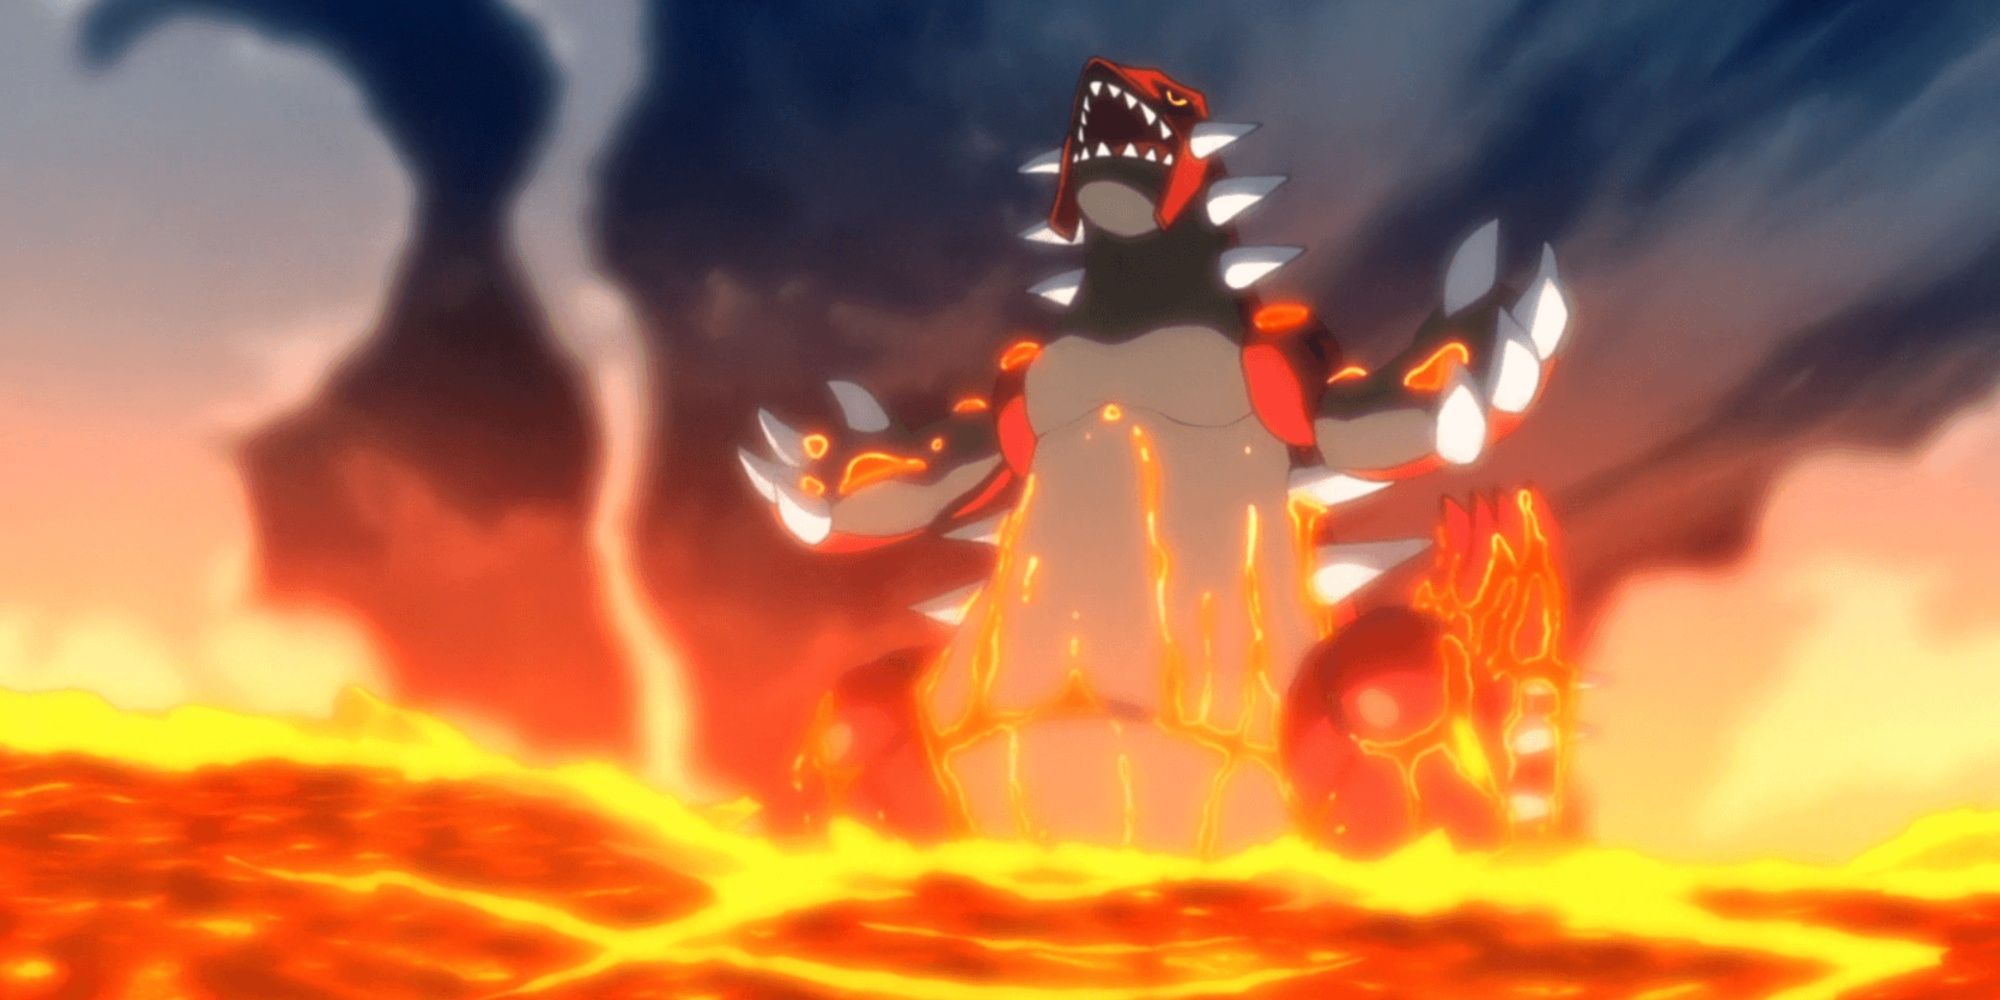 groudon in the pokemon anime emerging from lava